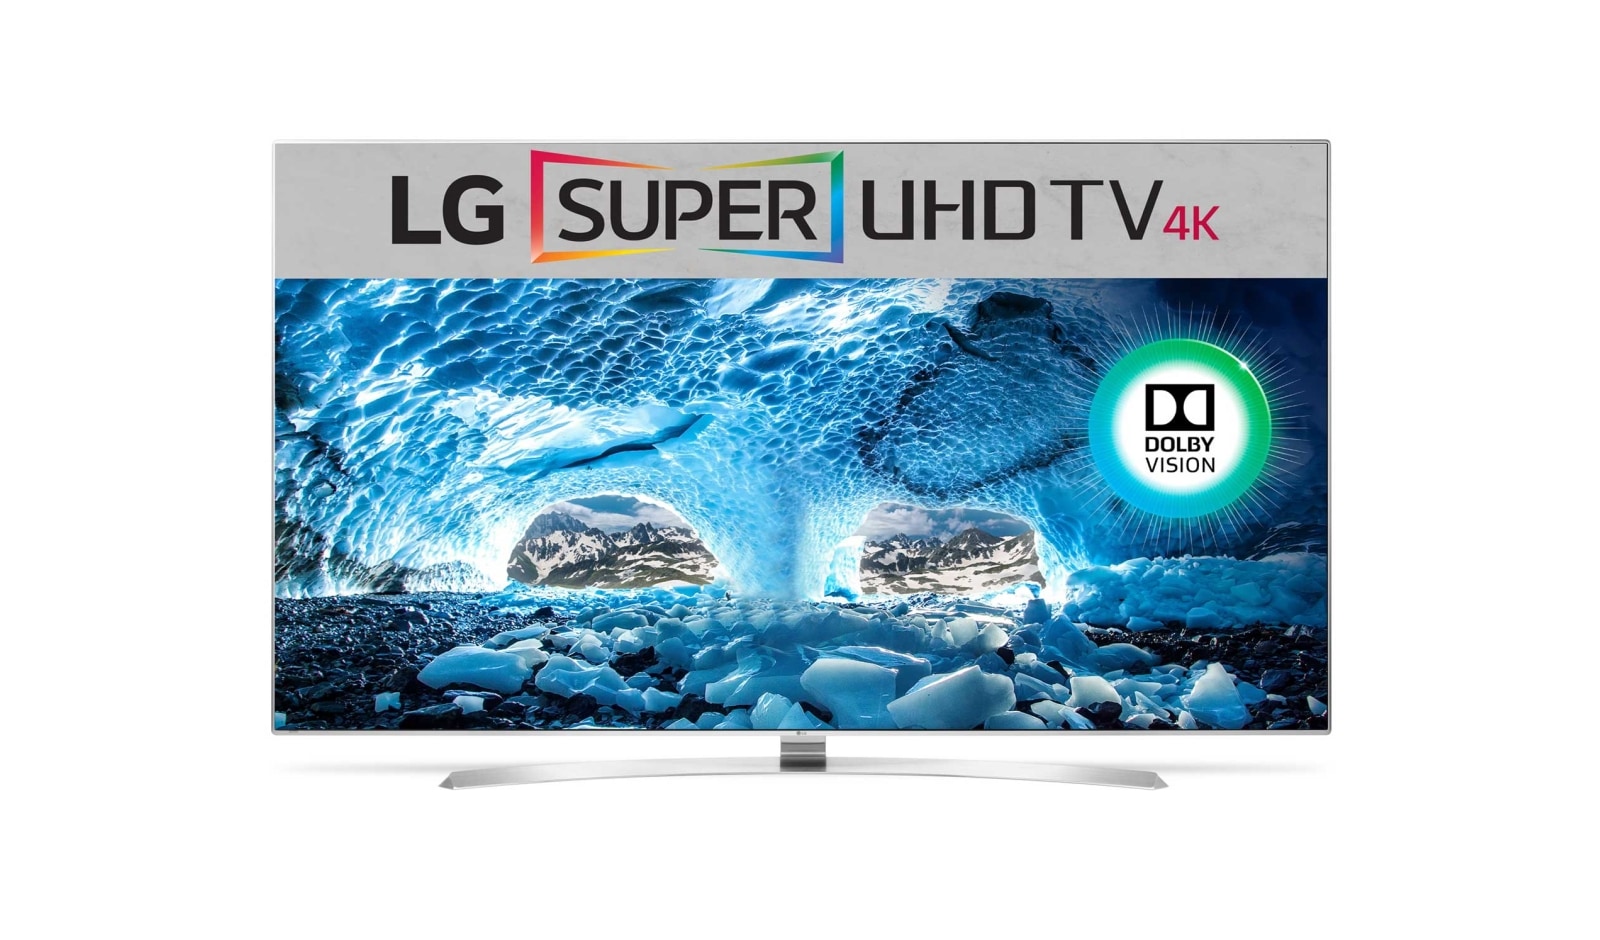 LG 55inch SUPER UHD 4K TV - 55UH950T | LG Australia